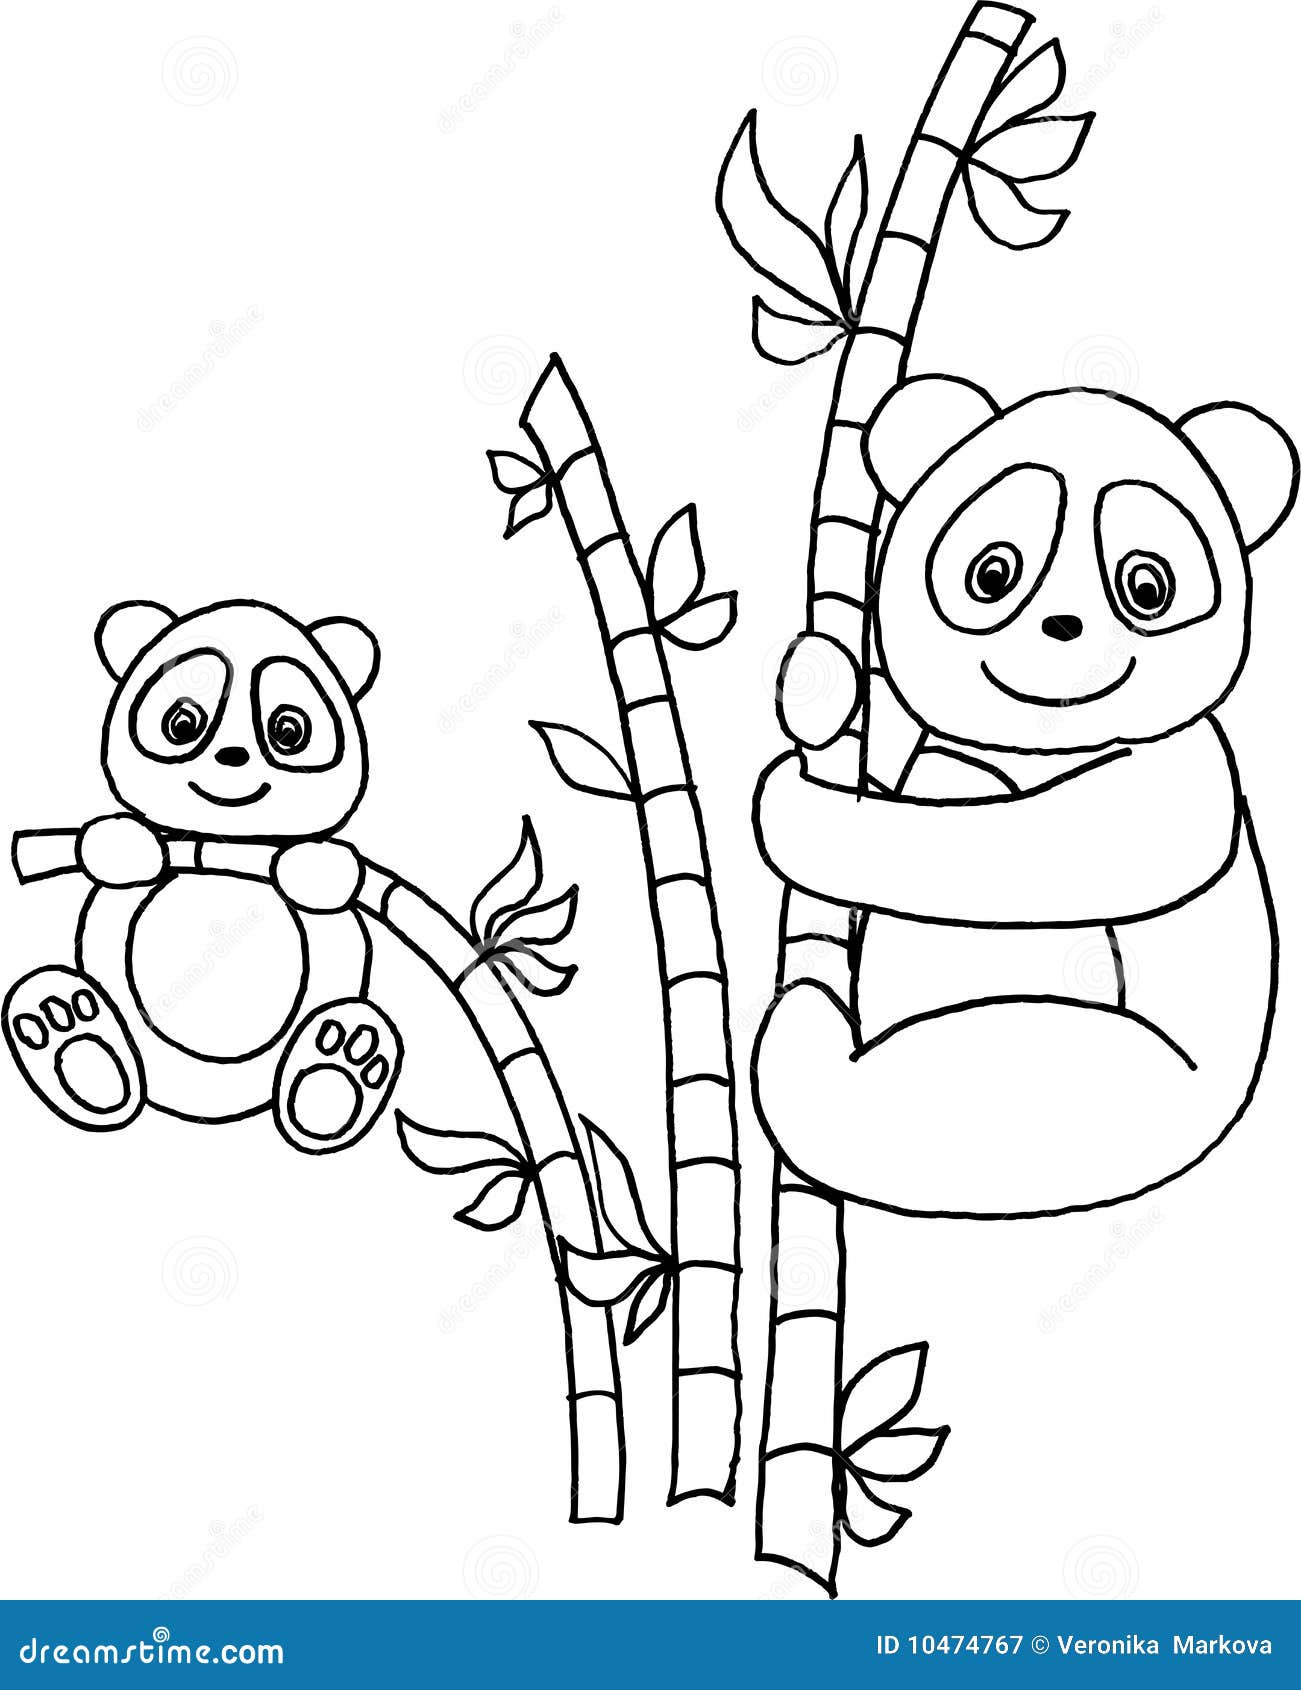 panda with bamboo stock vector illustration of panda